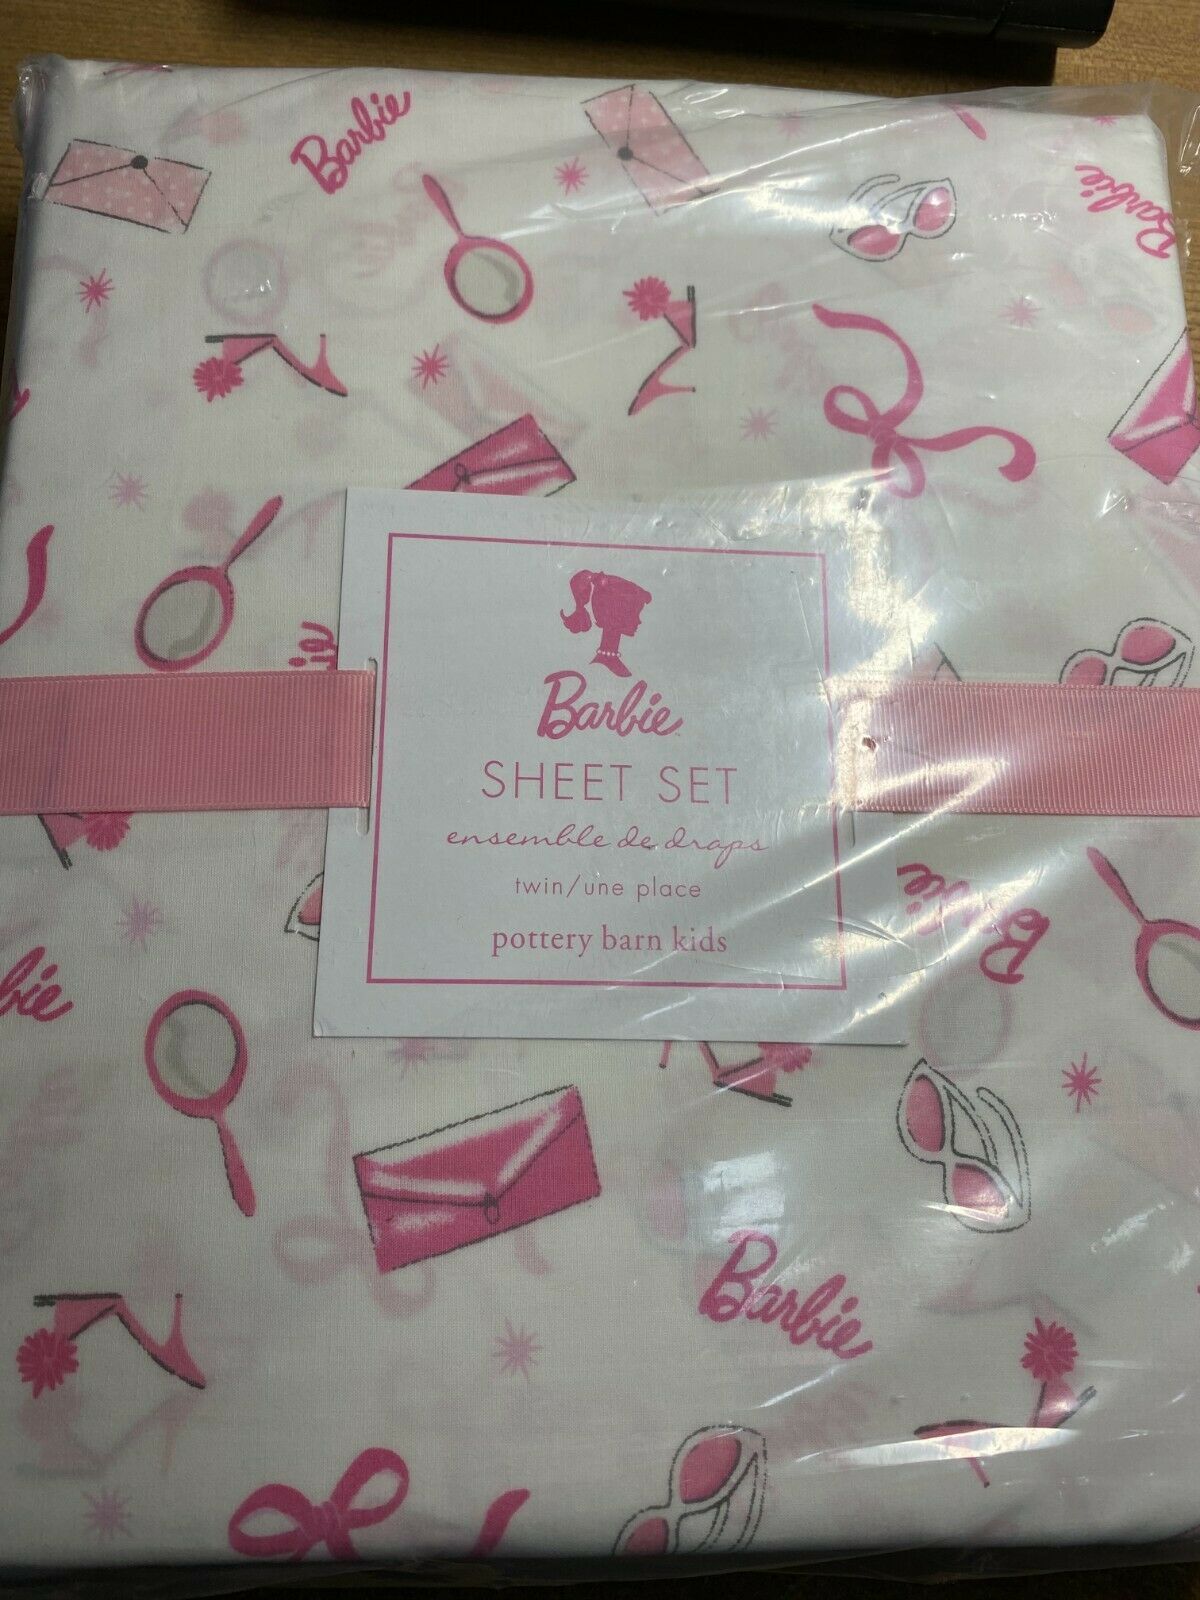 New Pottery Barn Kids Barbie Twin Size Sheet Set Organic Cotton Pink White Girl - $125.00